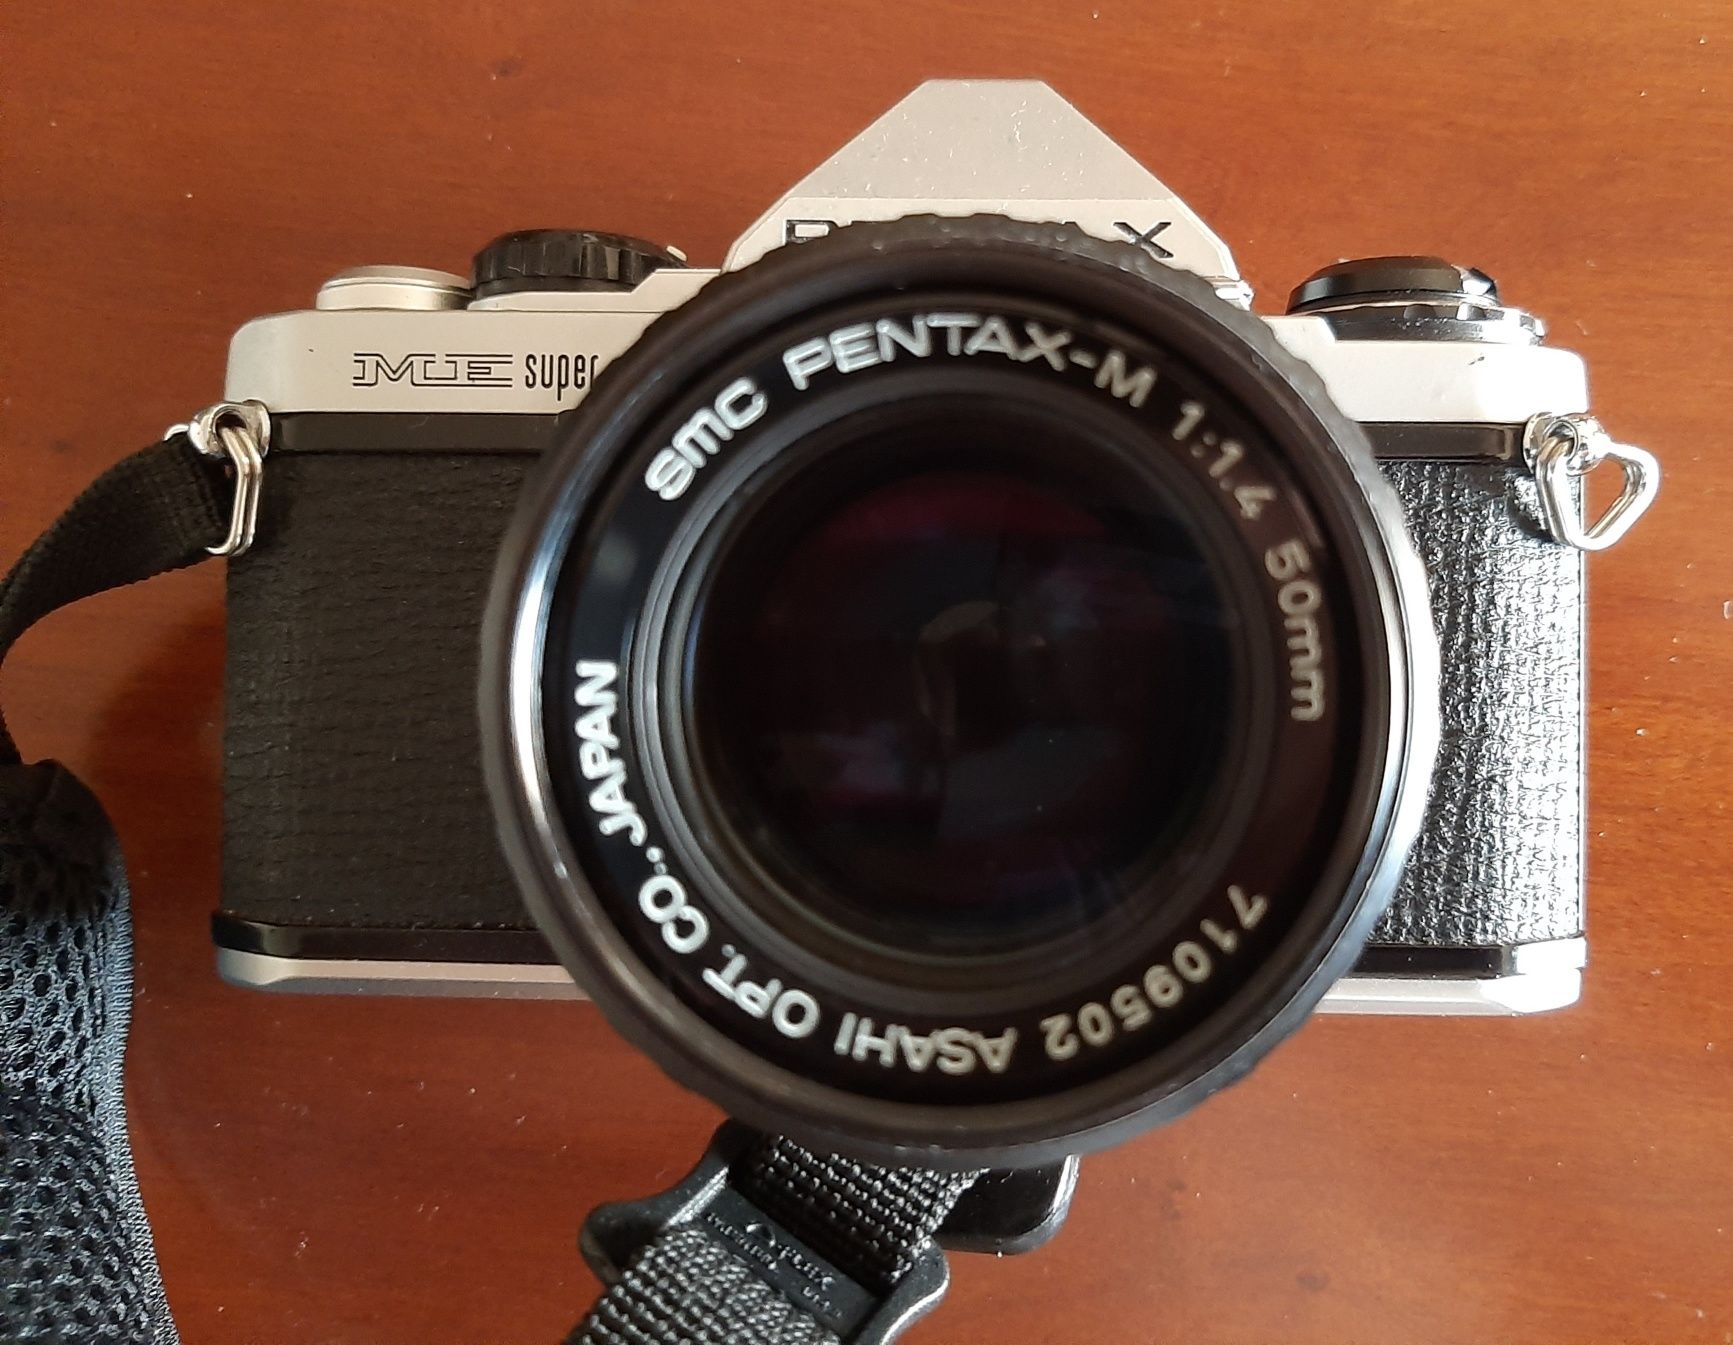 Pentax ME Super com lente smc Pentax-M 50 mm f1.4